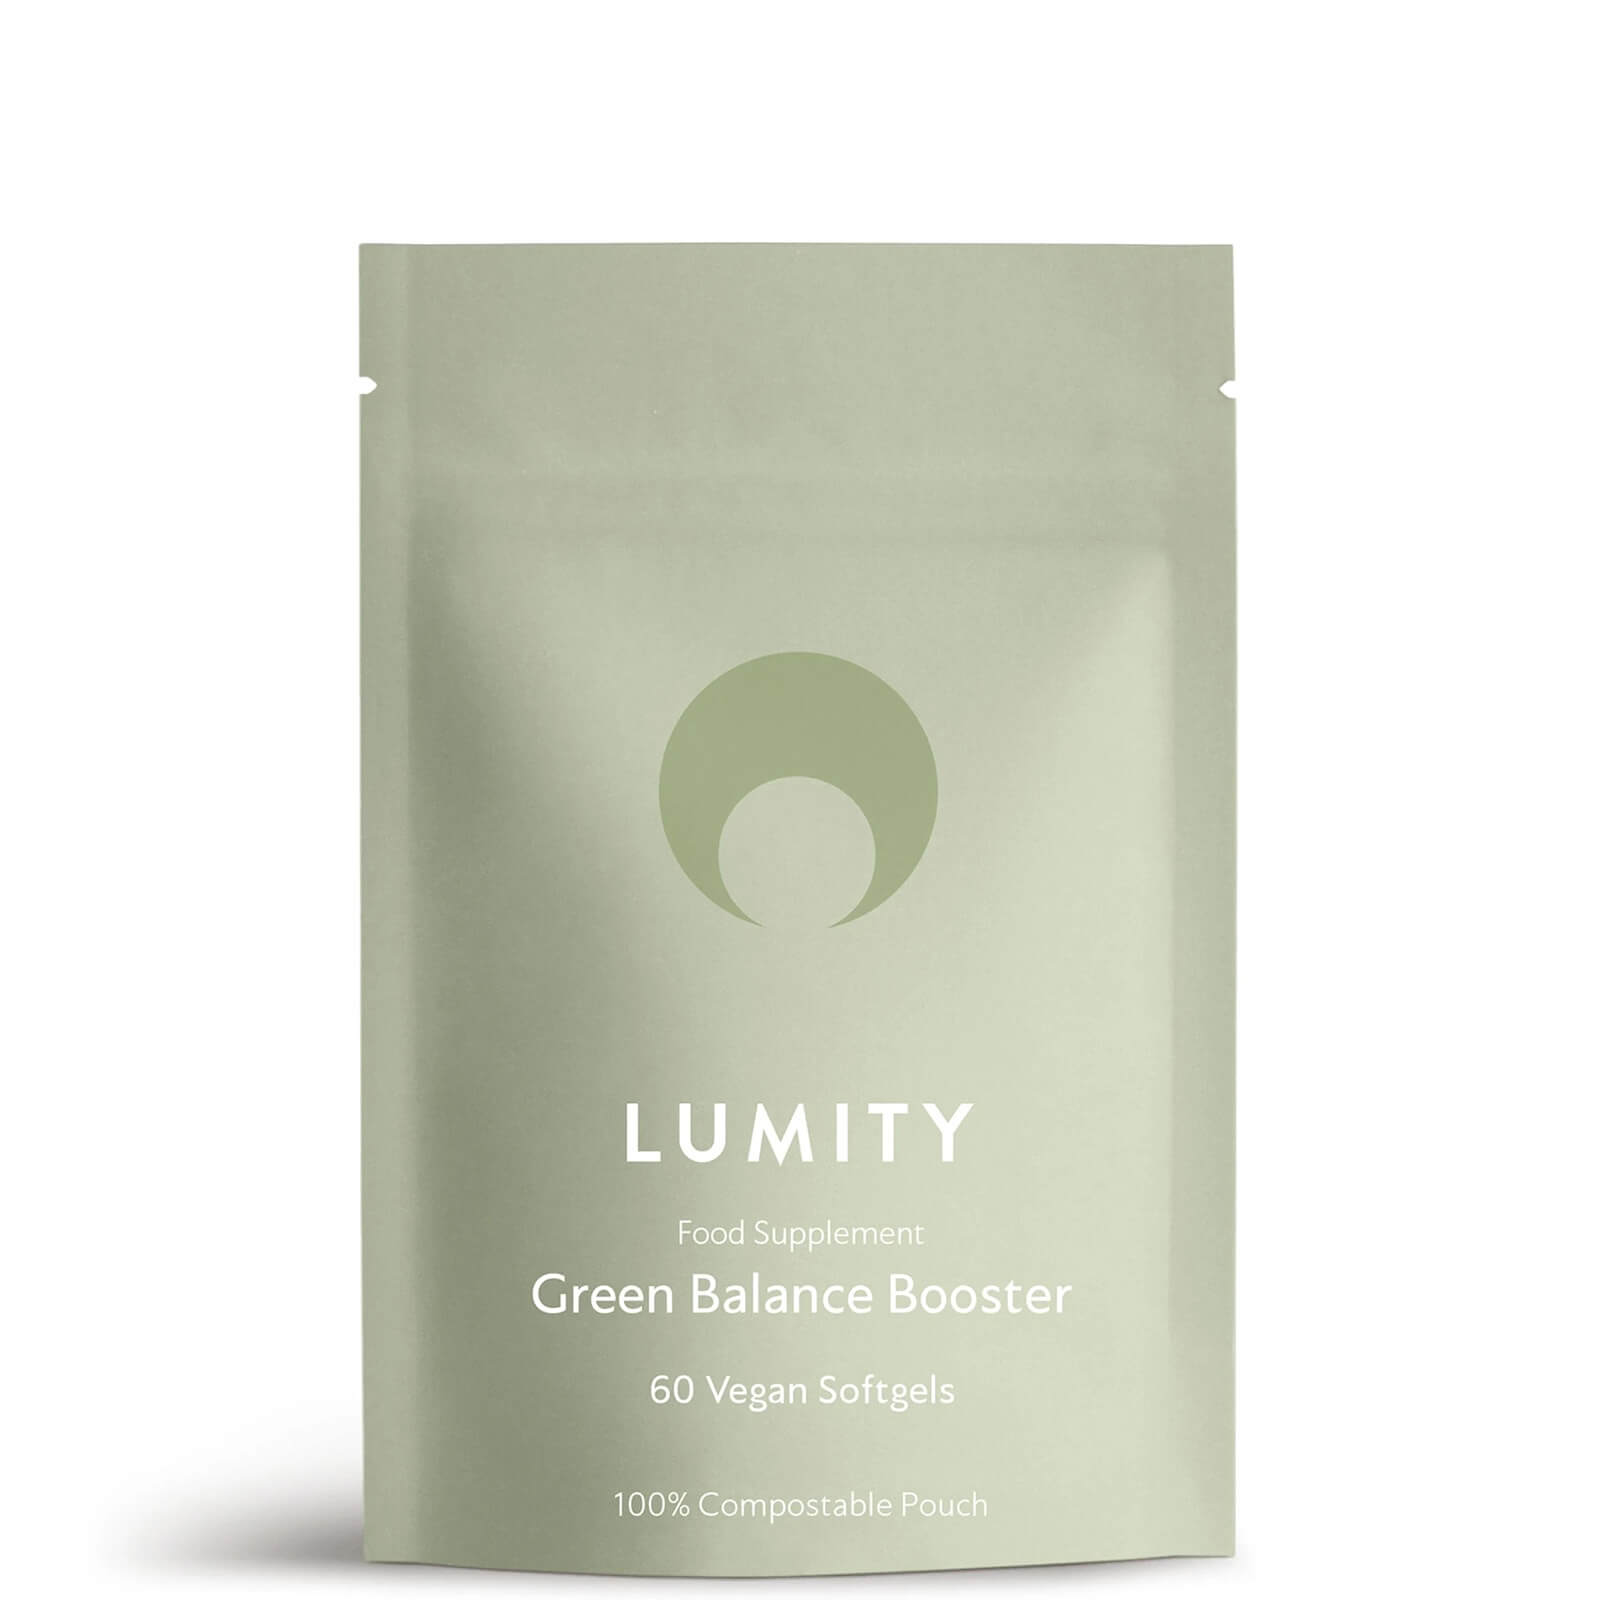 Lumity Green Balance Booster Supplement lookfantastic.com imagine